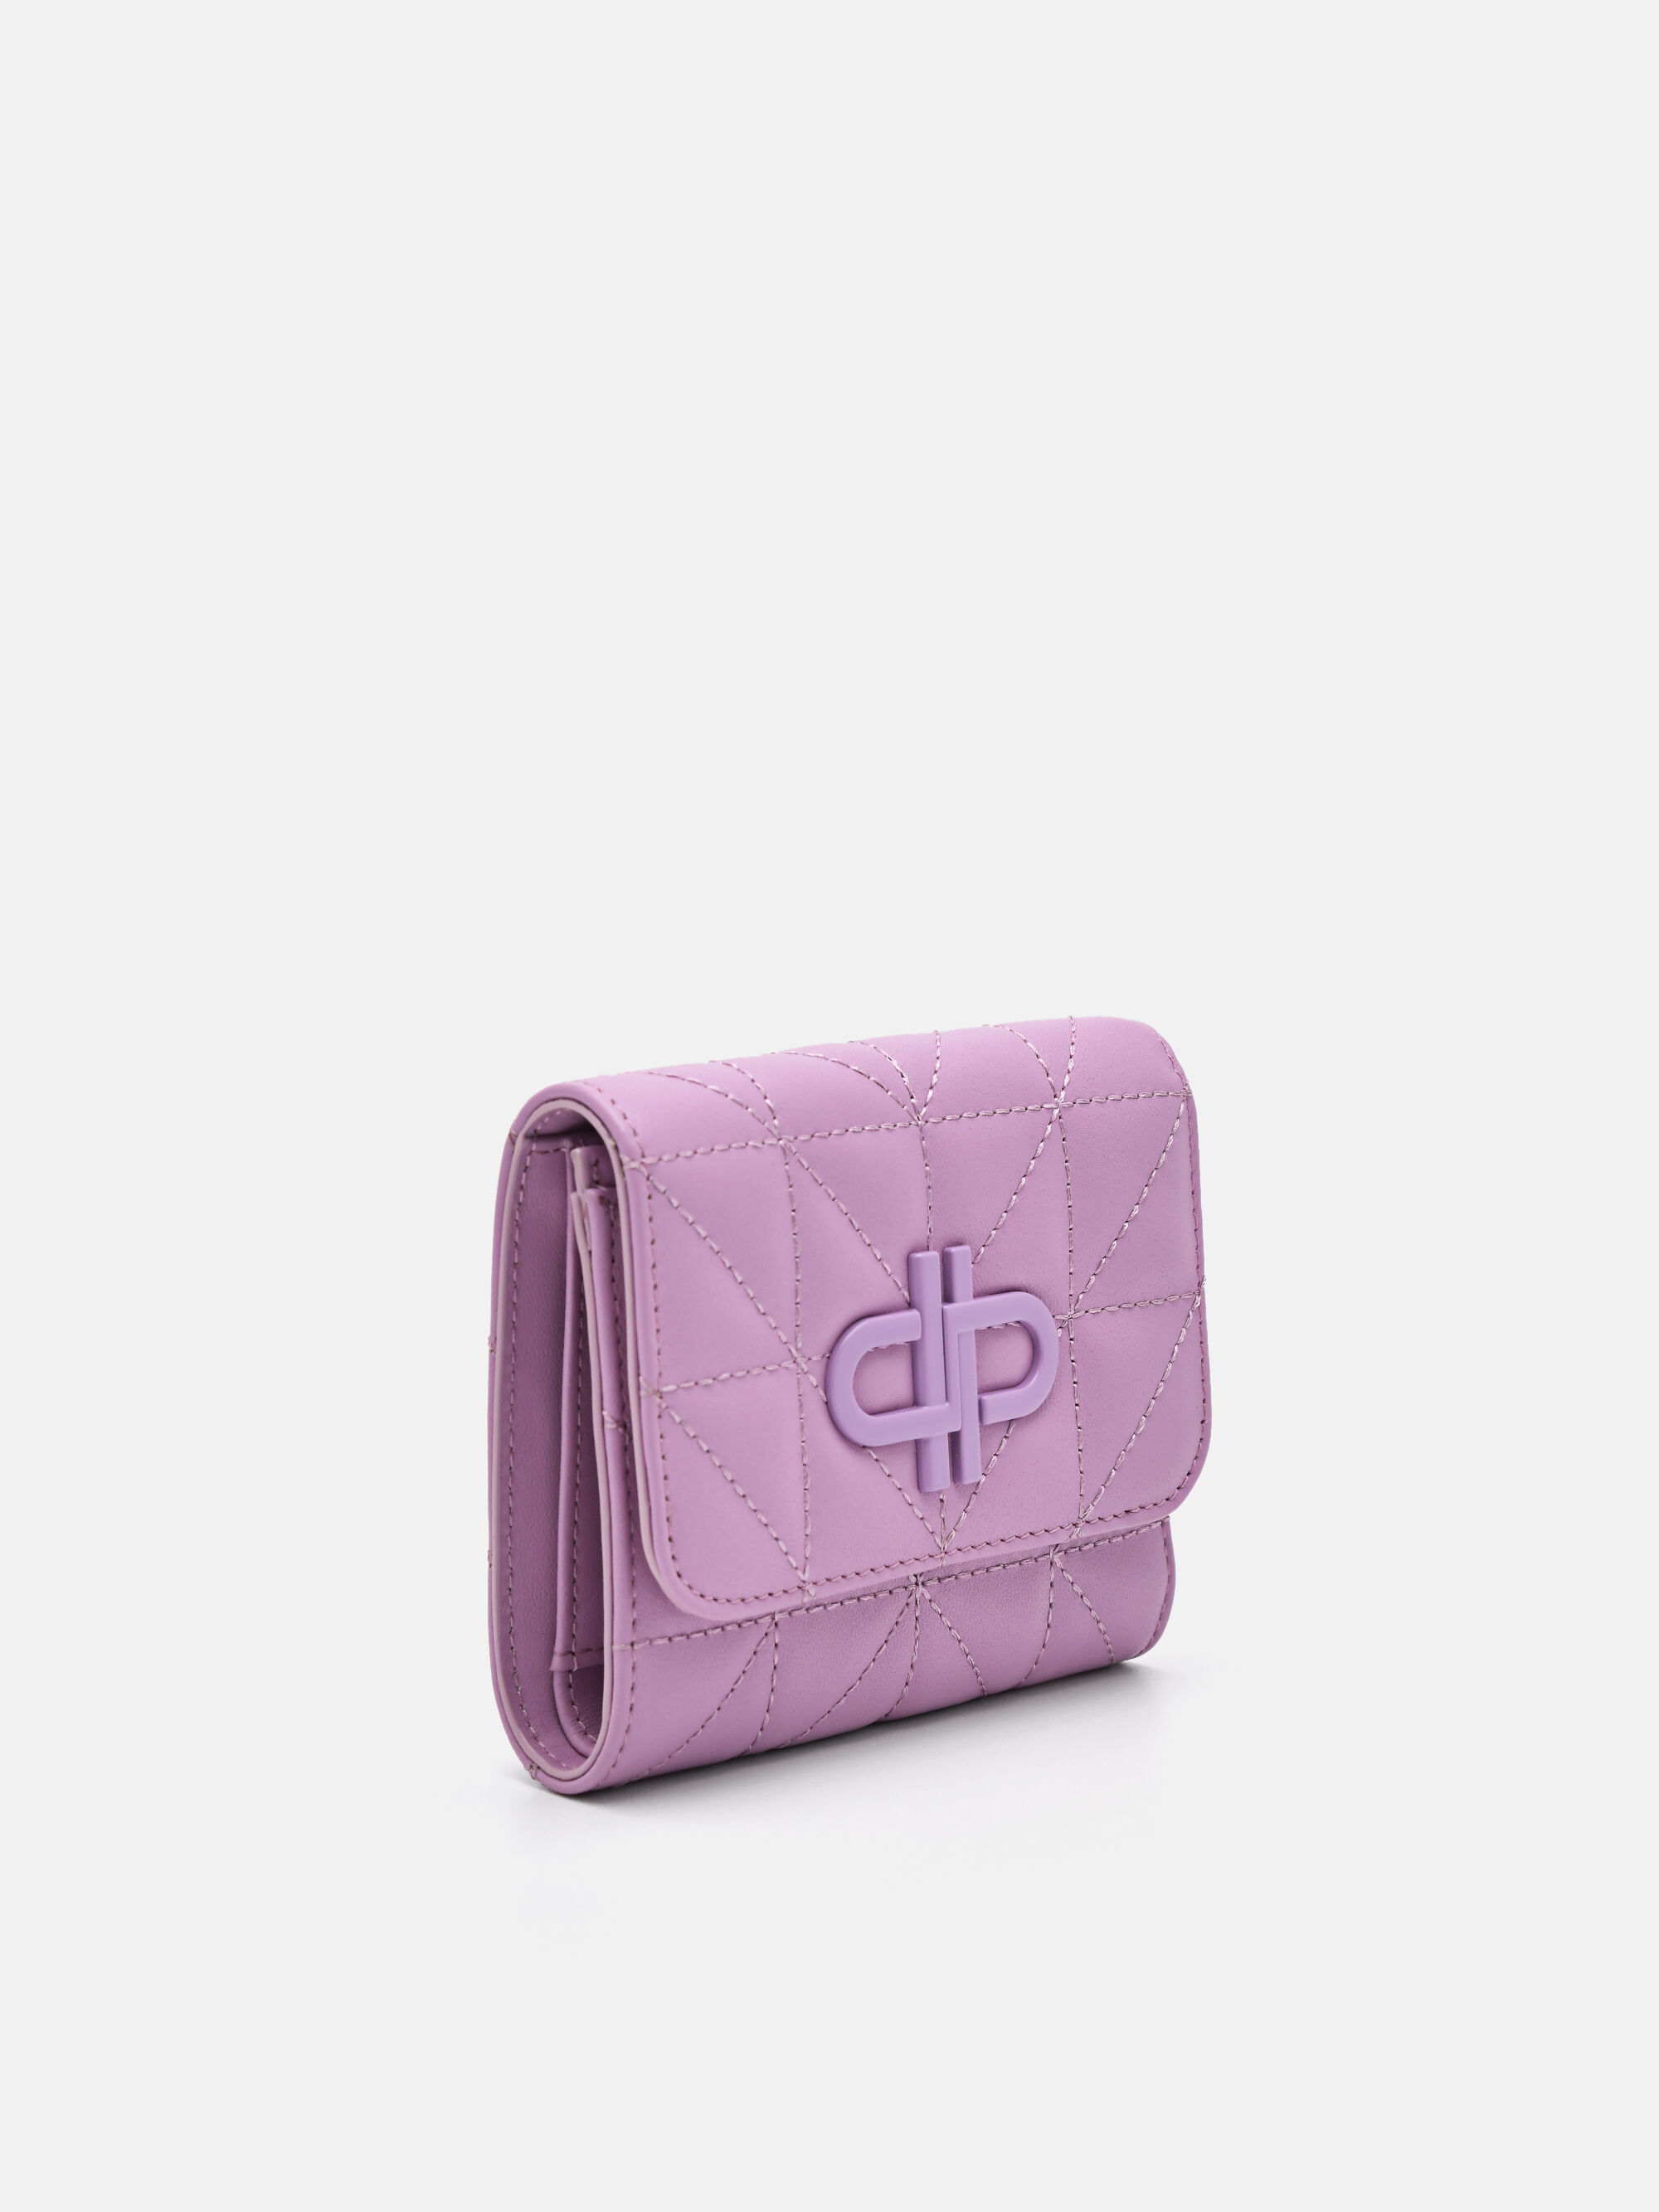 PEDRO Icon Leather Tri-Fold Wallet in Pixel, Purple